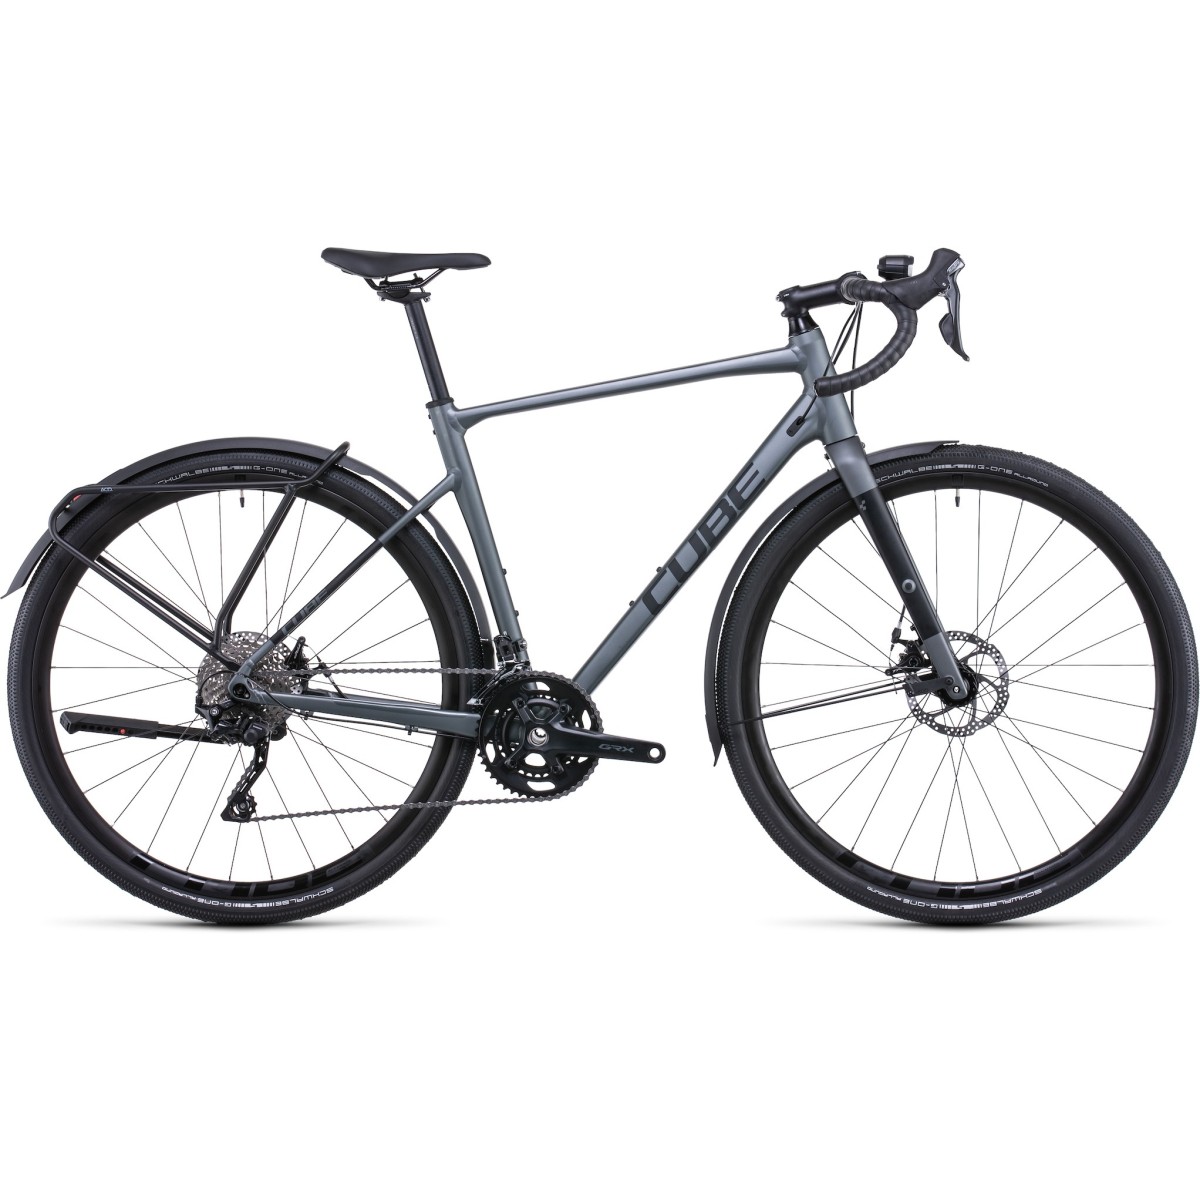 CUBE NUROAD PRO FE gravel bicycle - inkgrey/black - 2022